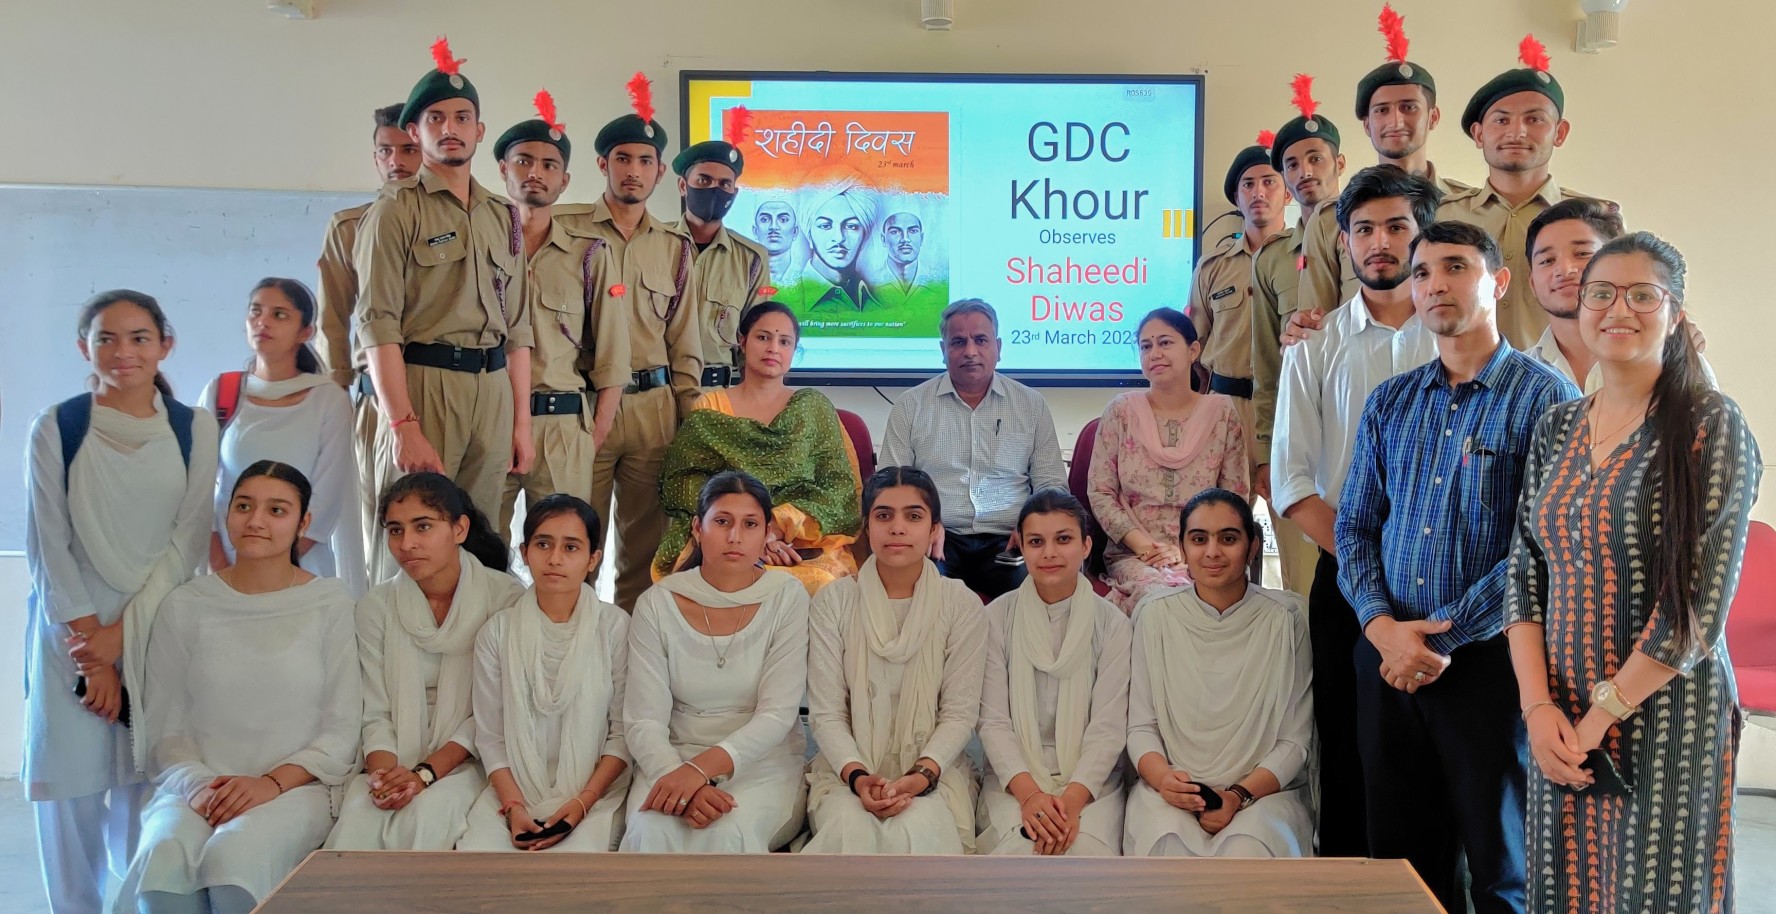 NCC & NSS unit of GDC Khour observes “Shaheedi Diwas”